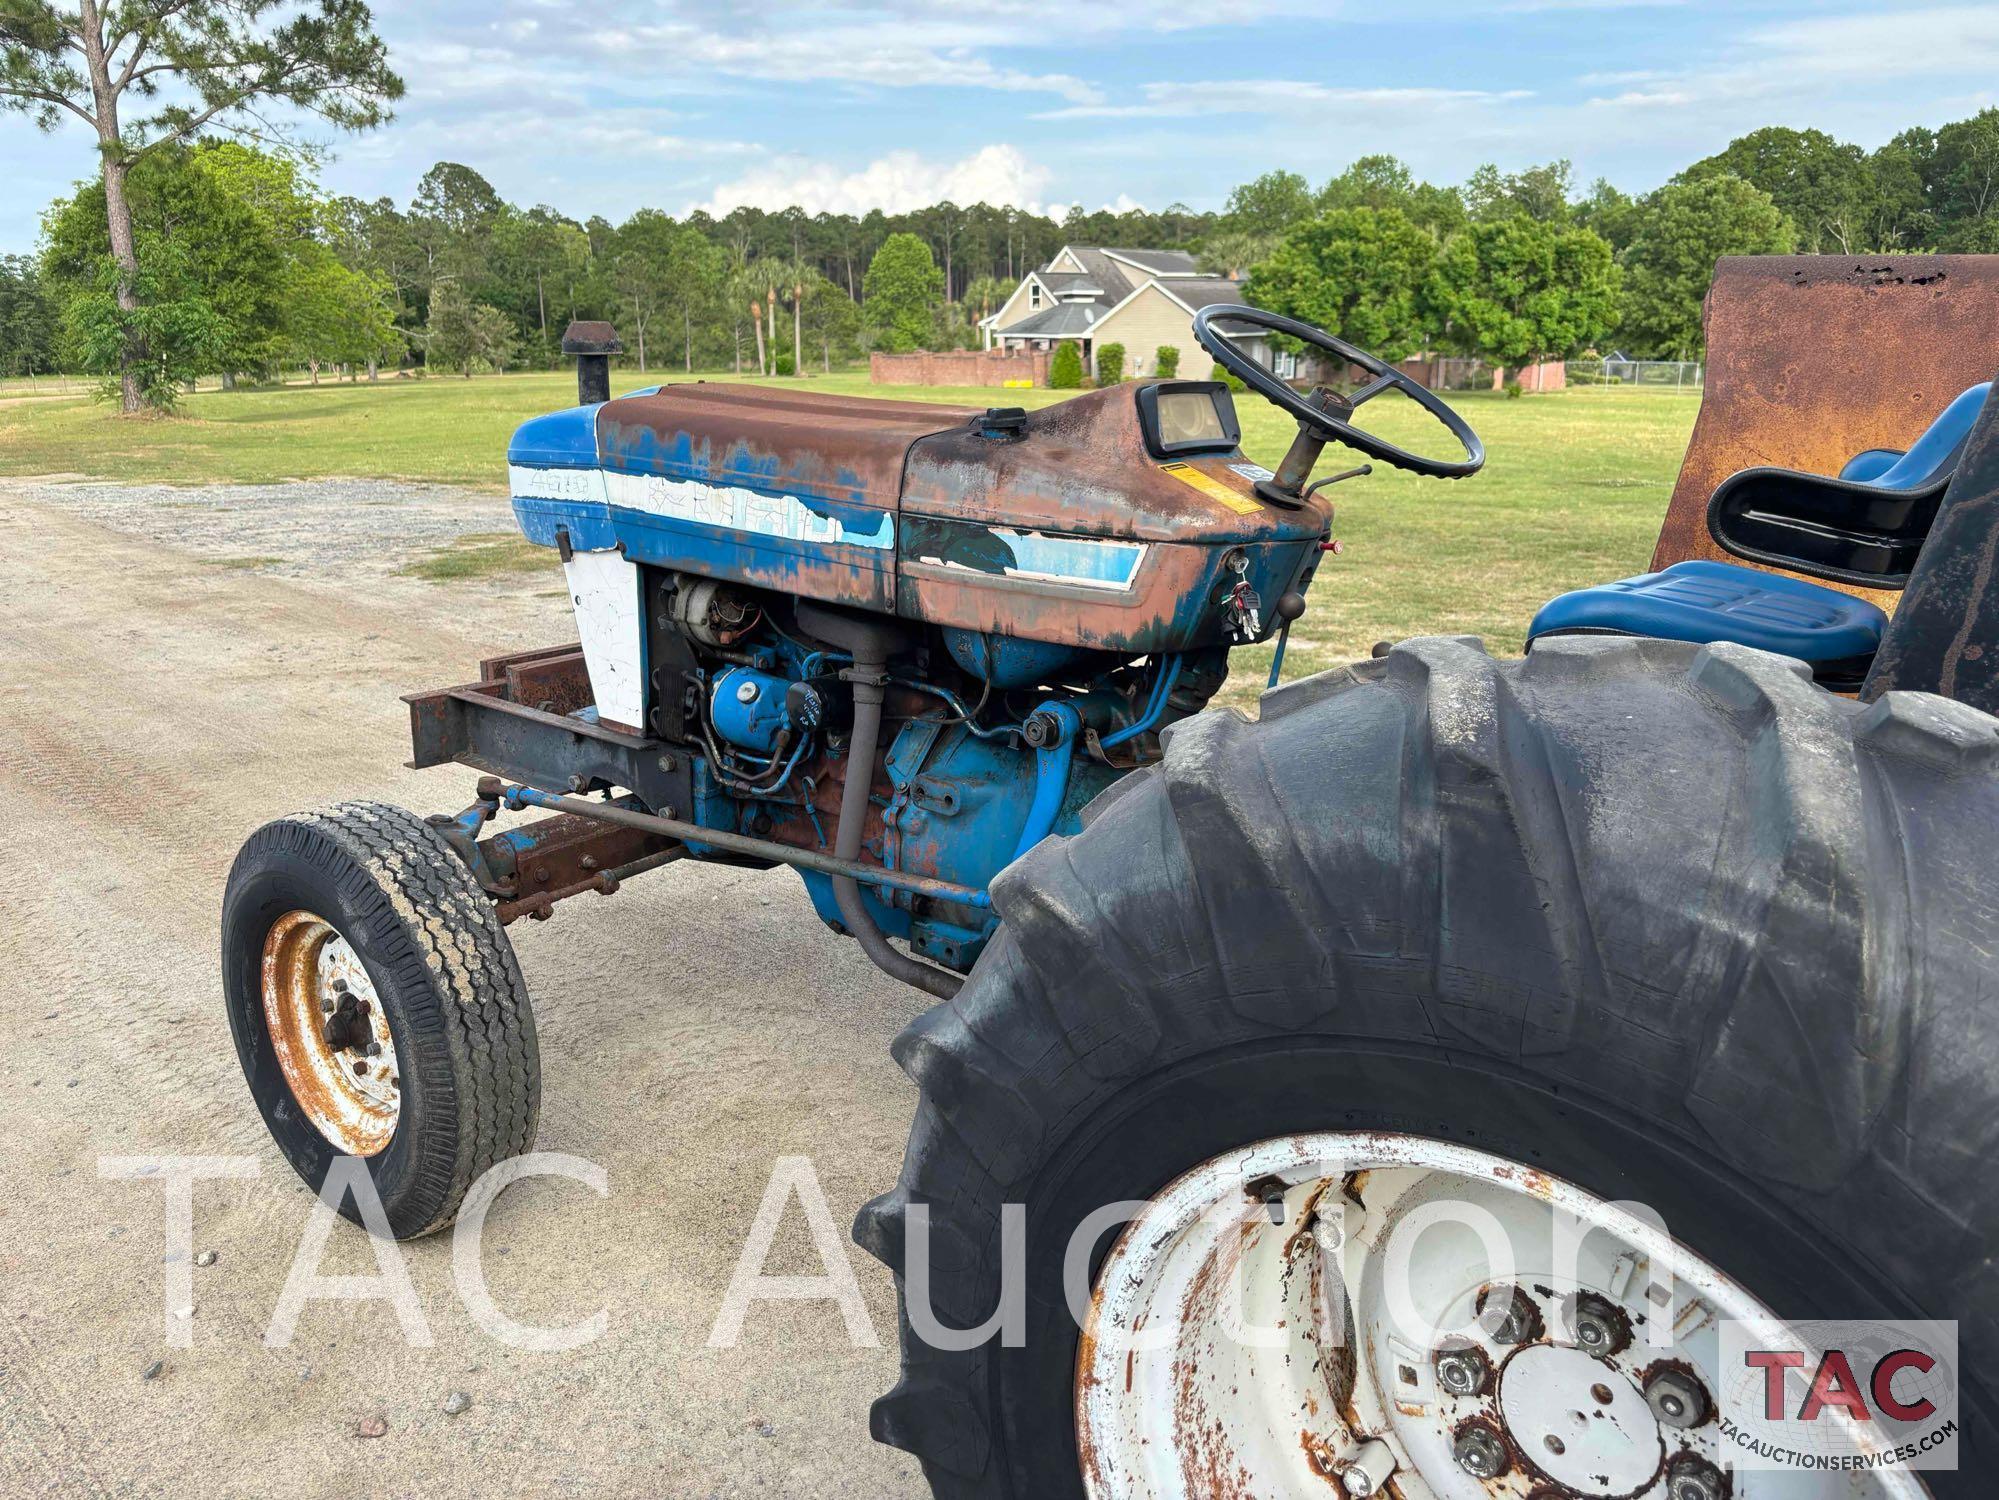 1985 Ford 4610 Farm Tractor